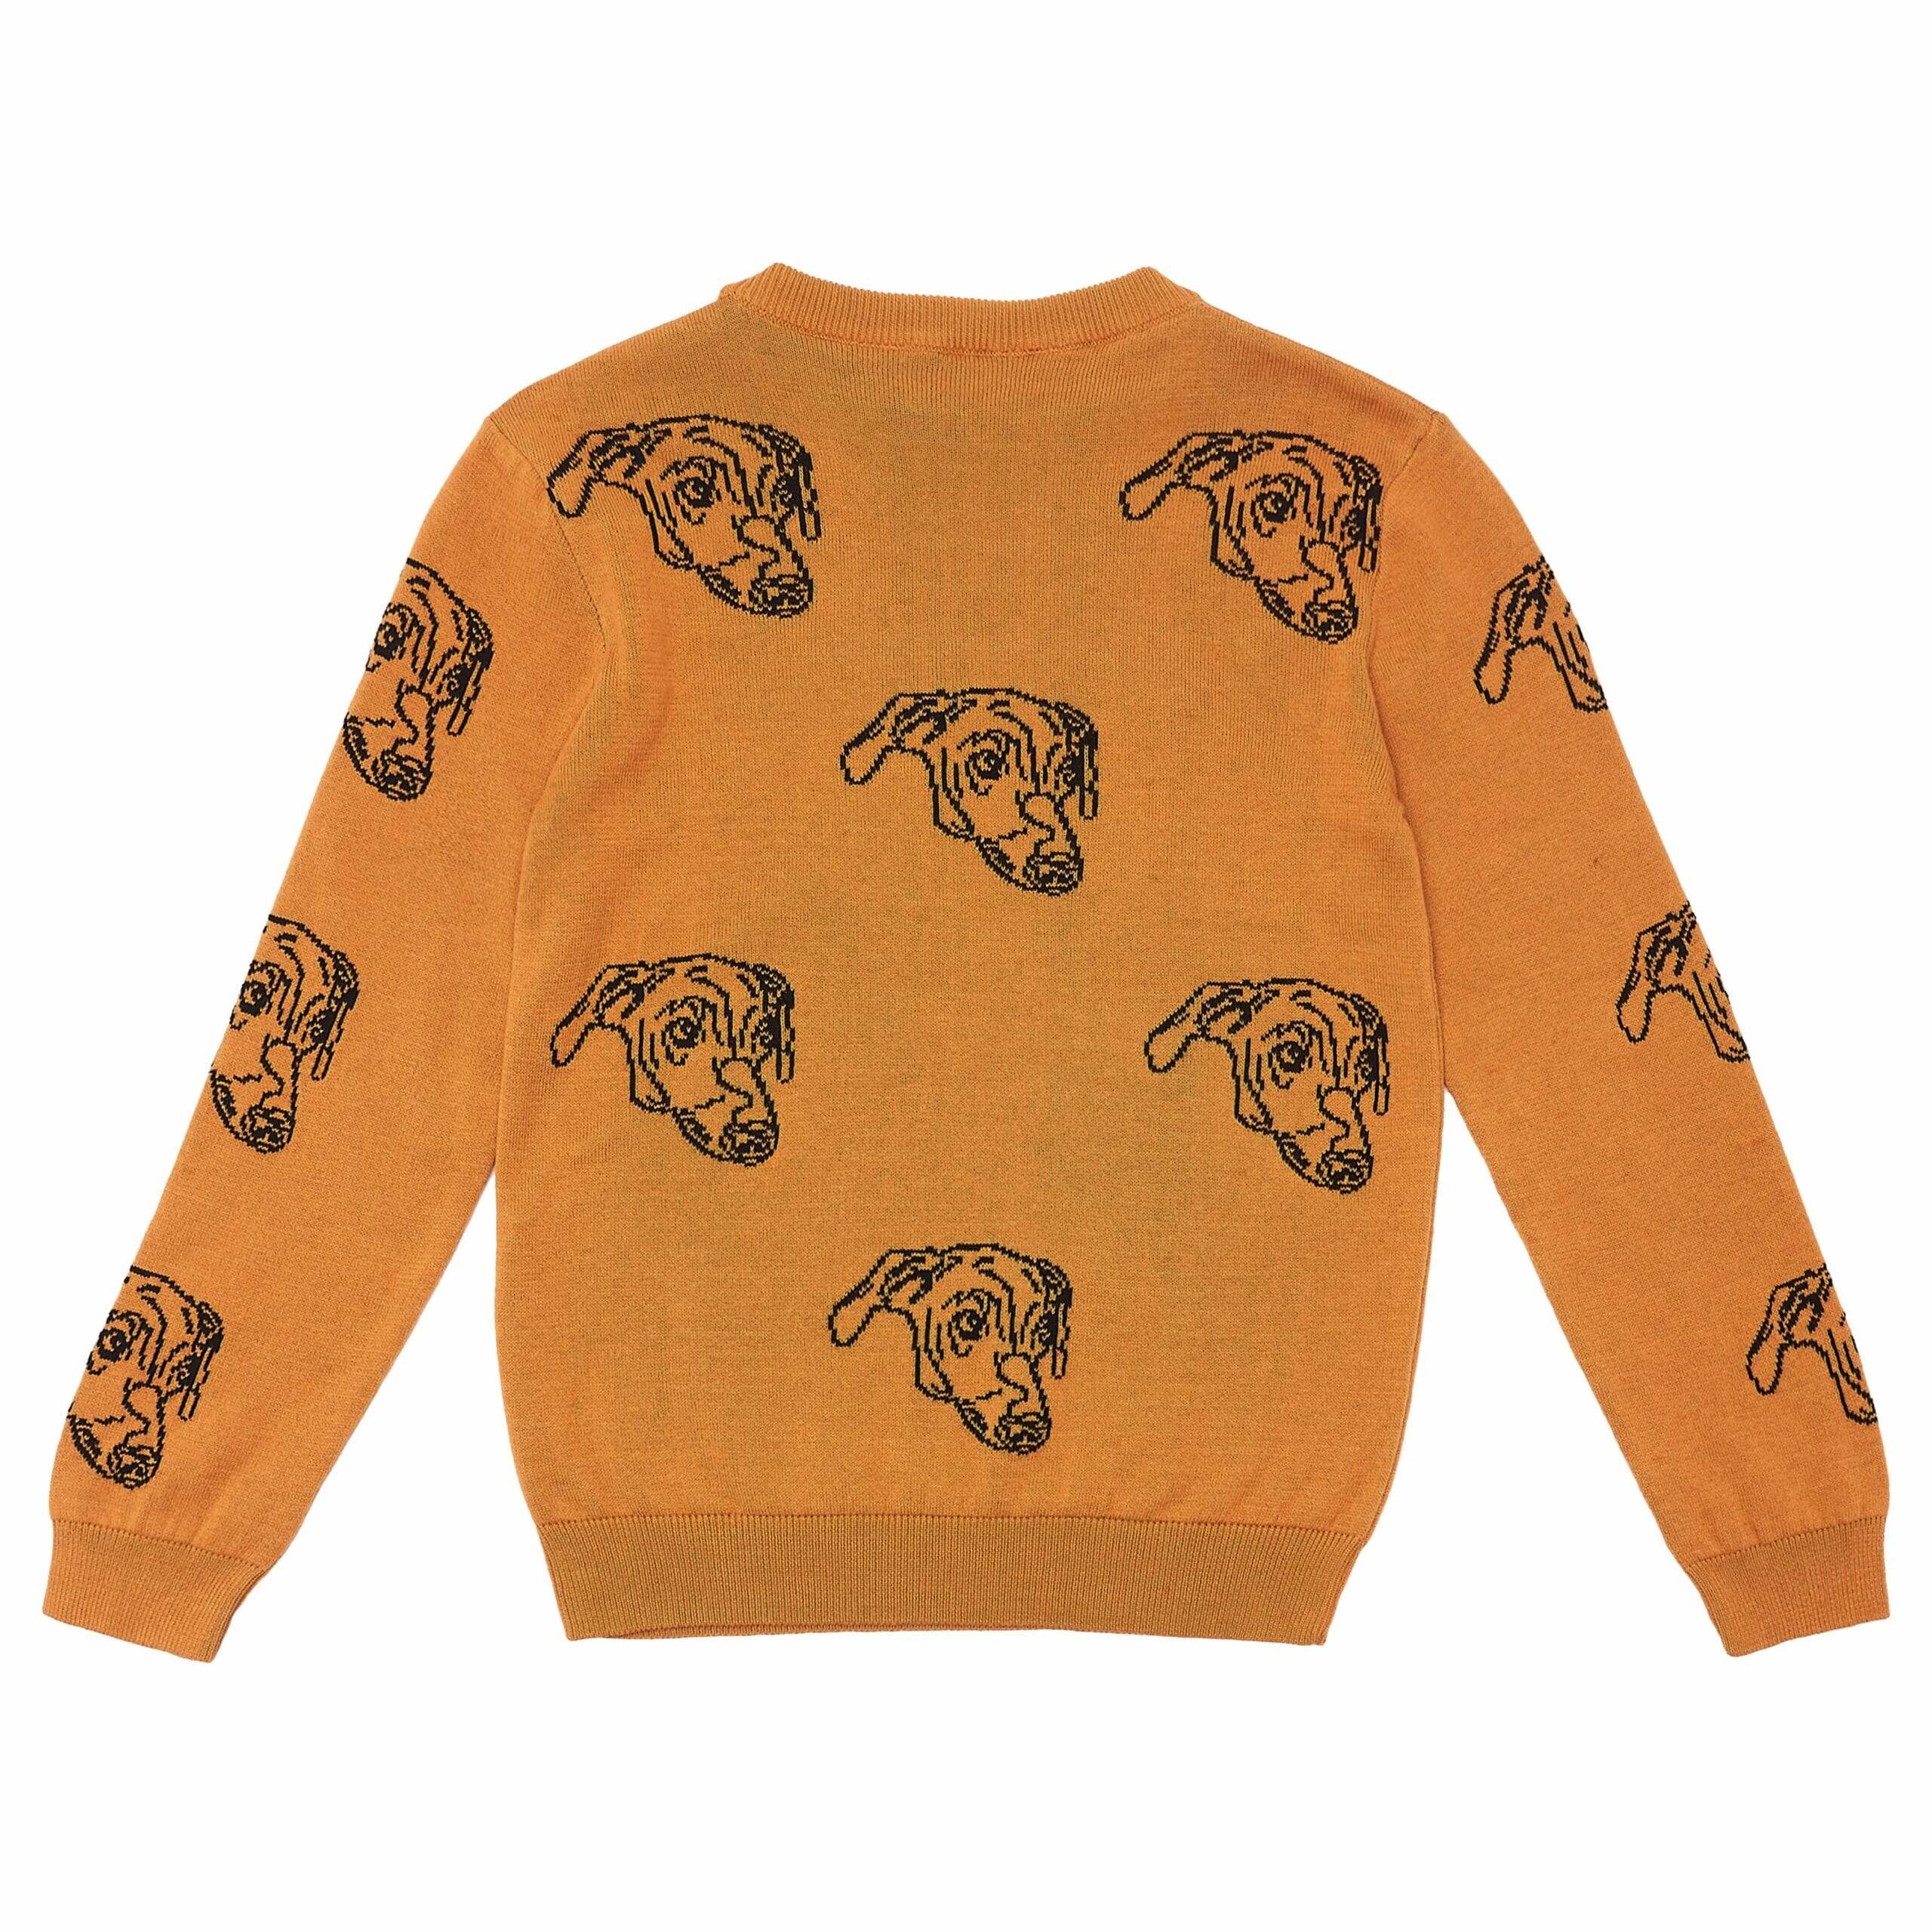 Frank Dog Knit Sweater